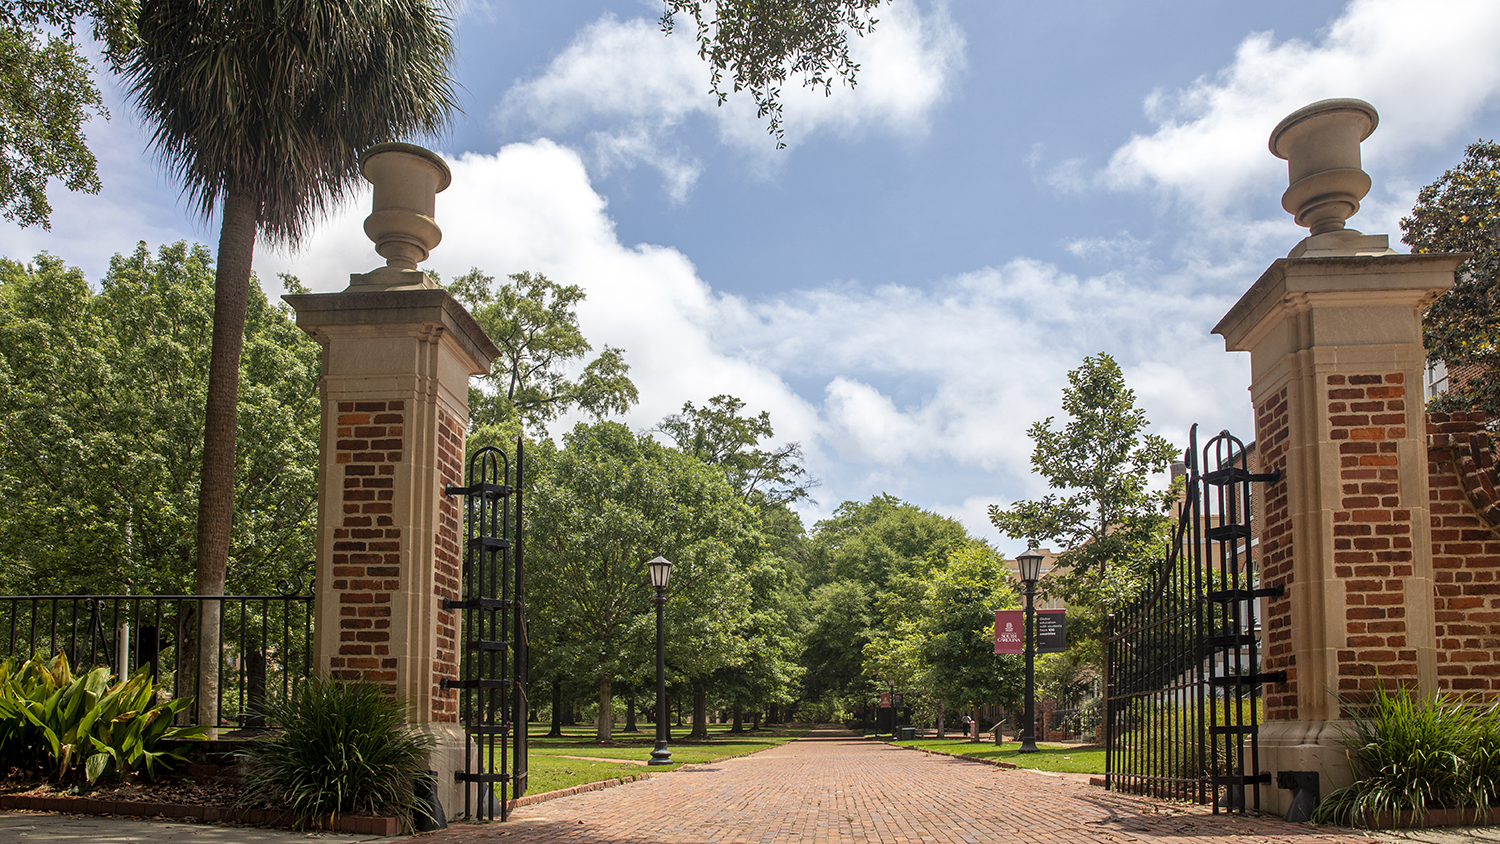 Brick pillars begin a horseshoe-shaped gate at the University of South Carolina. Trees surround the pillars.